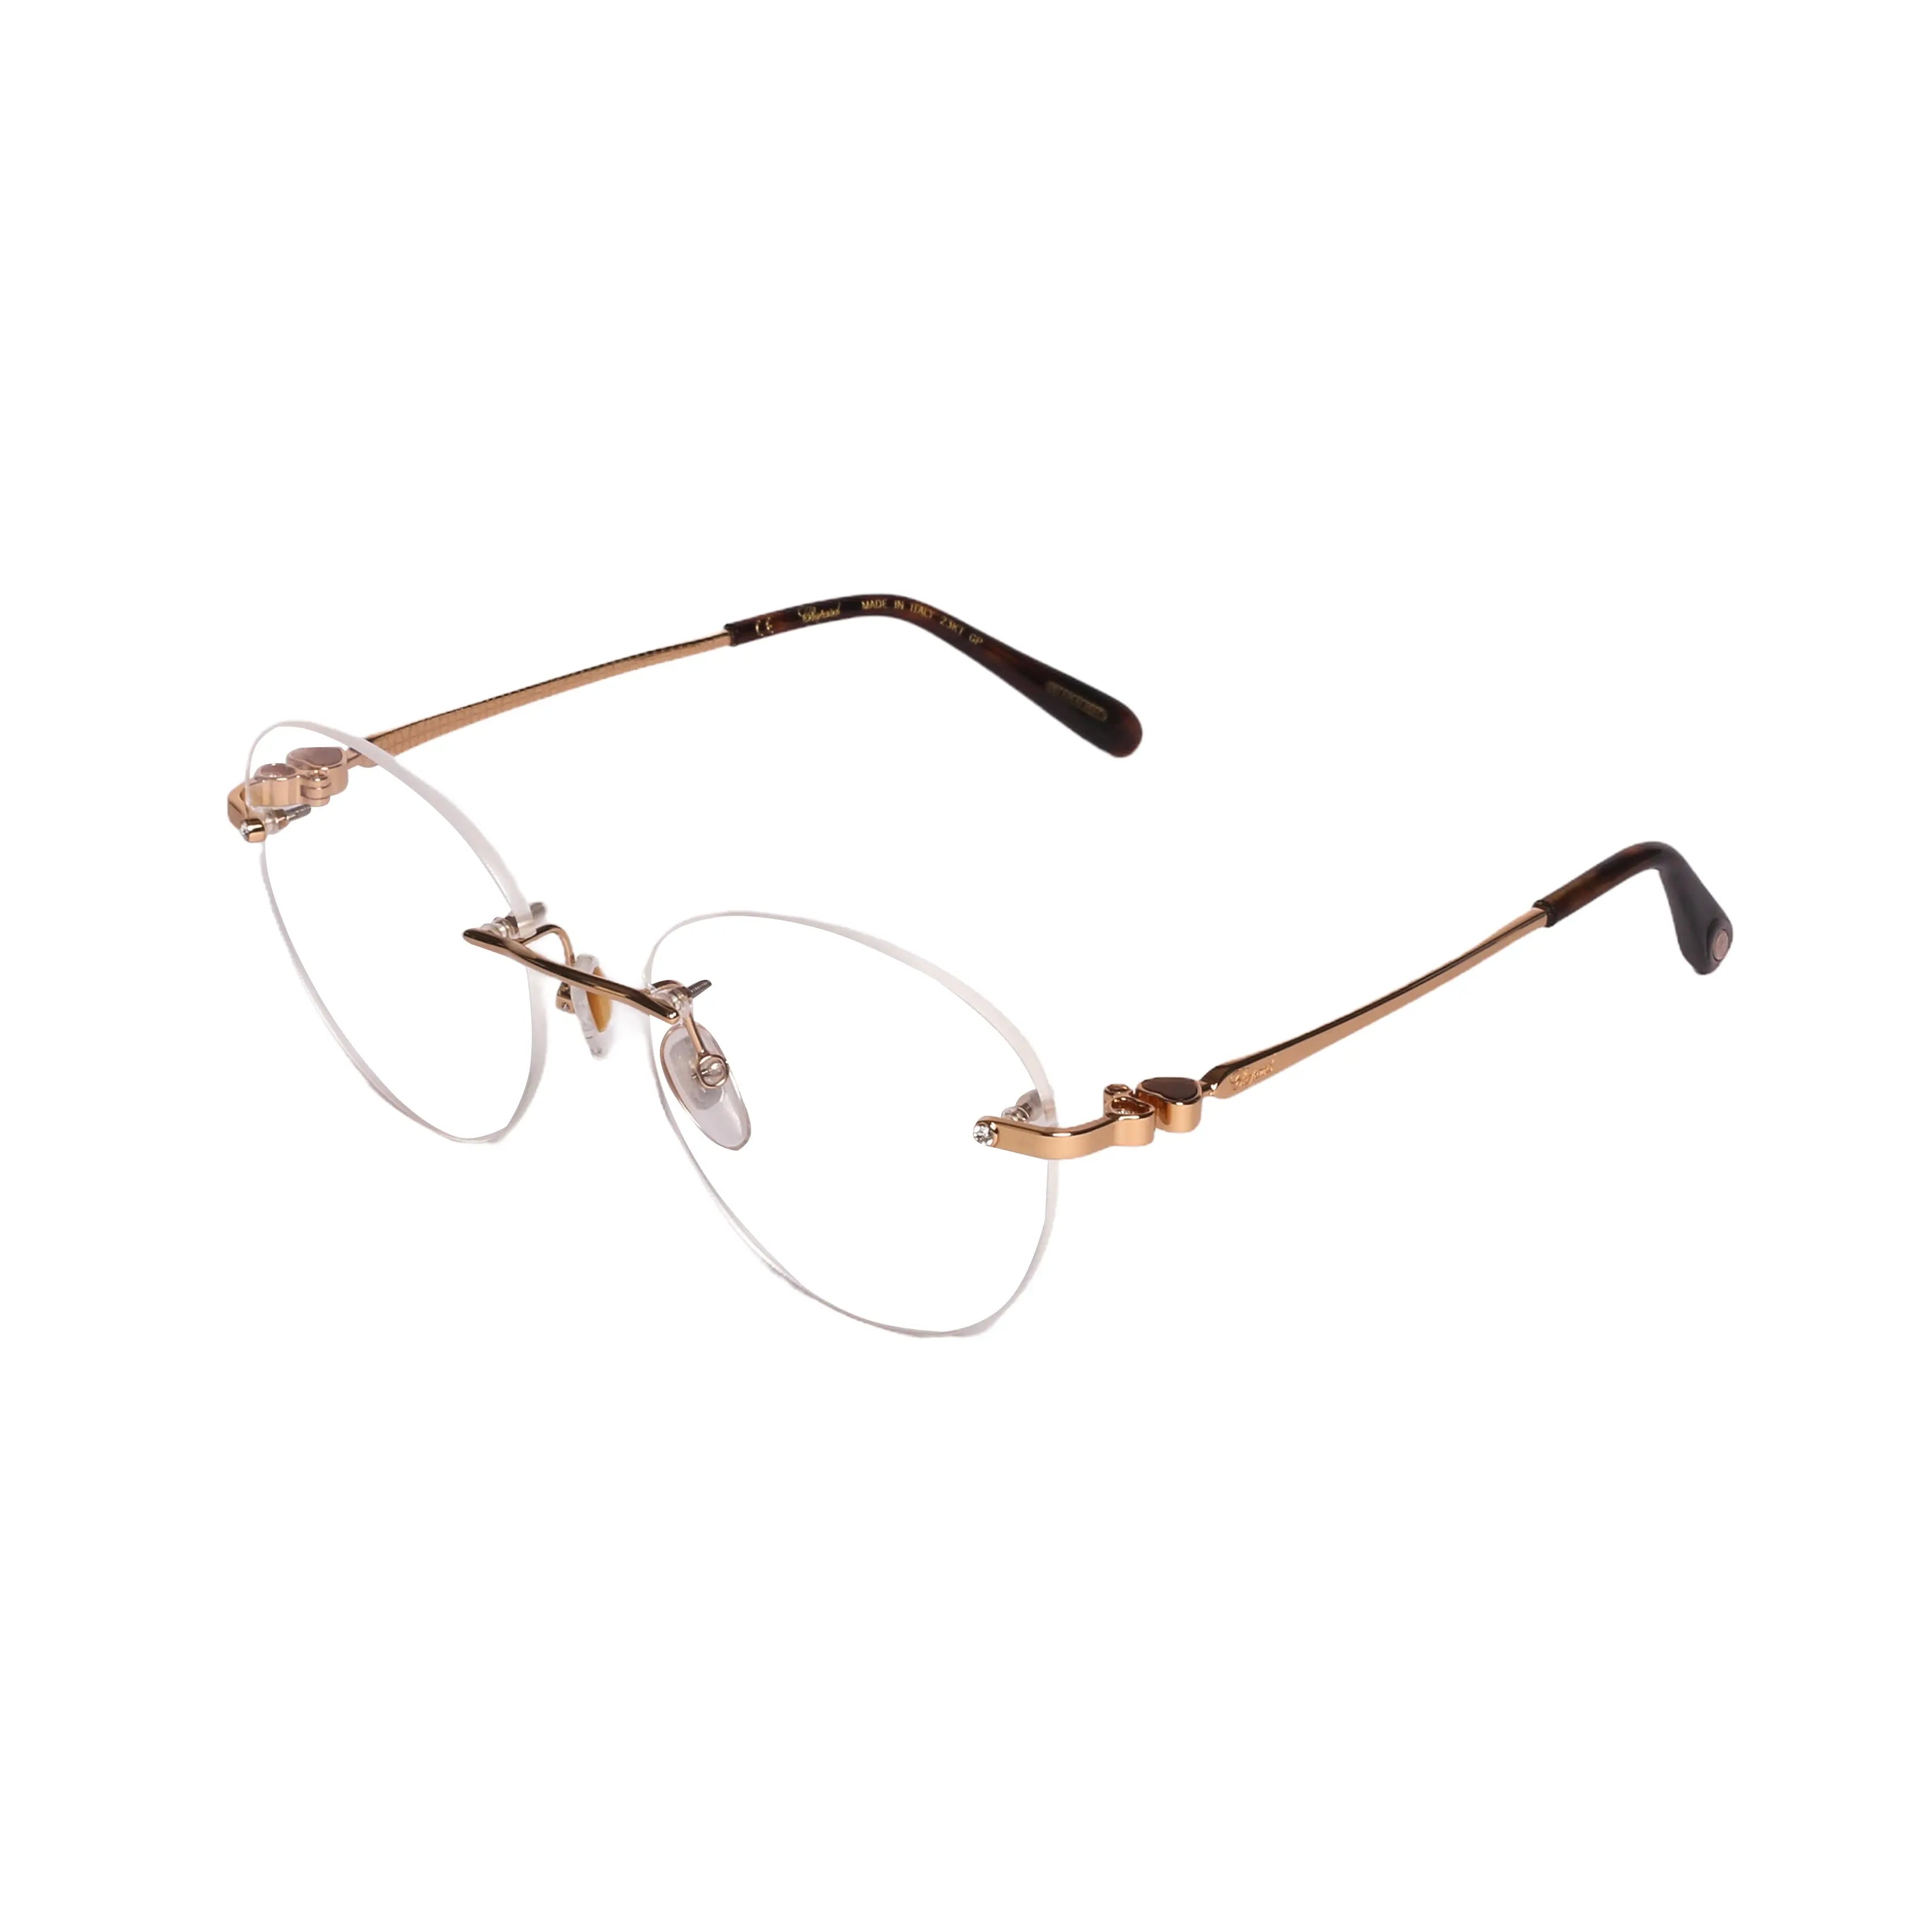 CHOPARD-VCHD 79S-54-300 Eyeglasses - Premium Eyeglasses from CHOPARD - Just Rs. 41900! Shop now at Laxmi Opticians